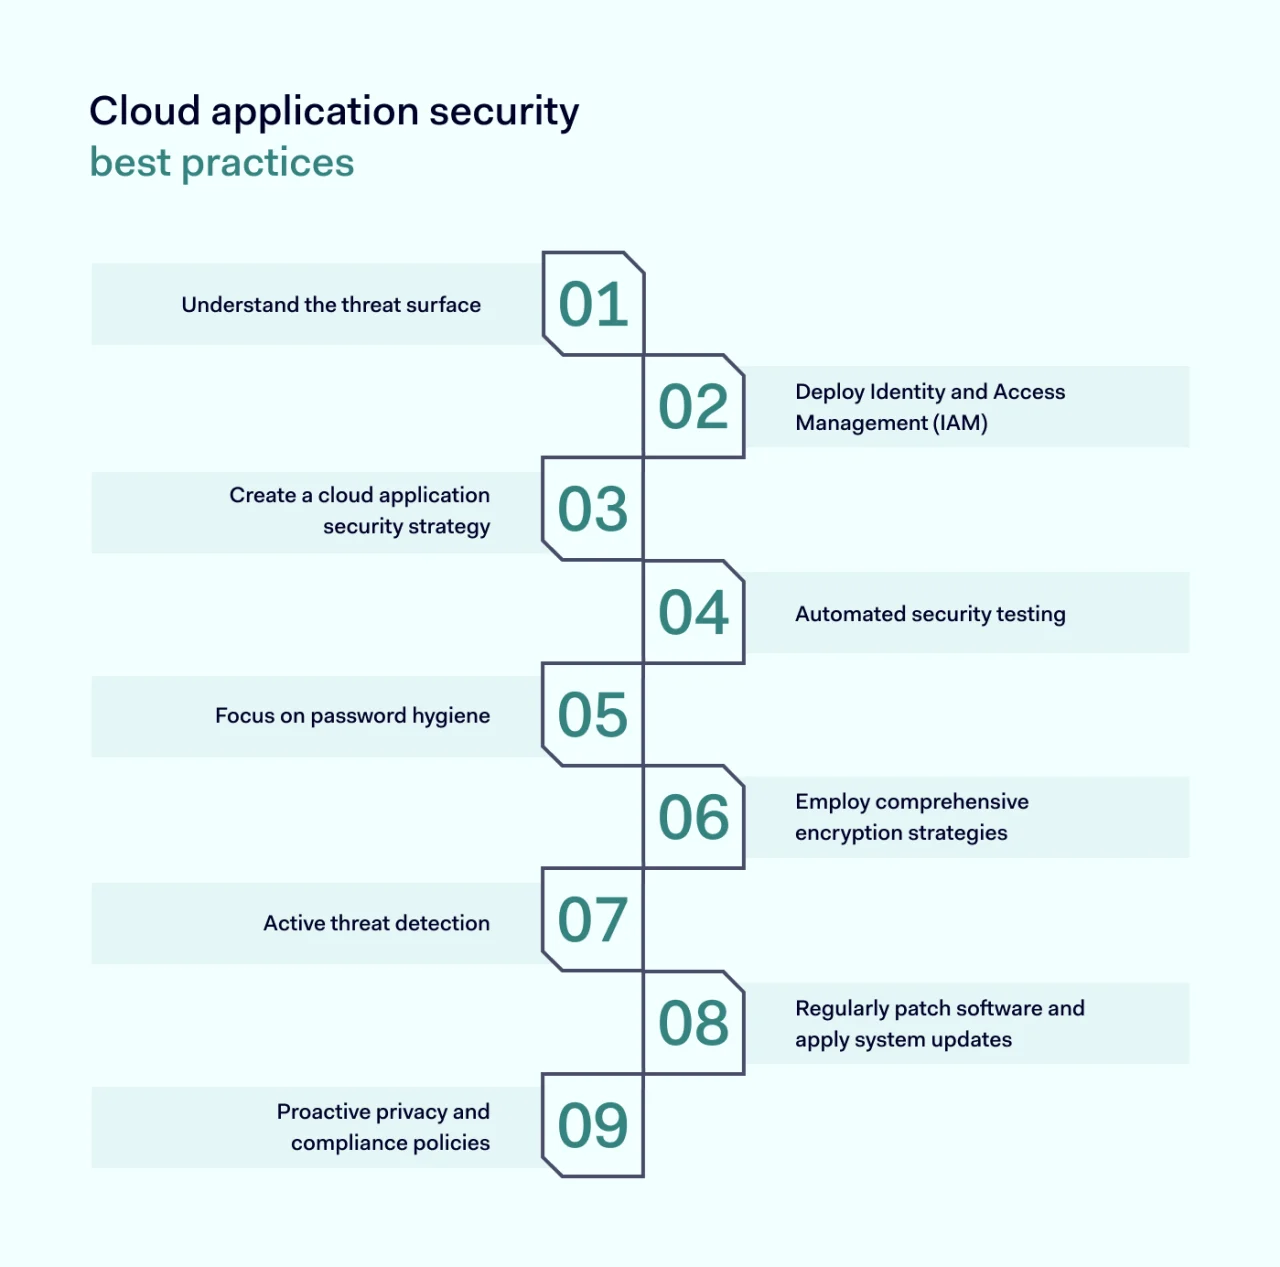 Cloud application security best practices full list